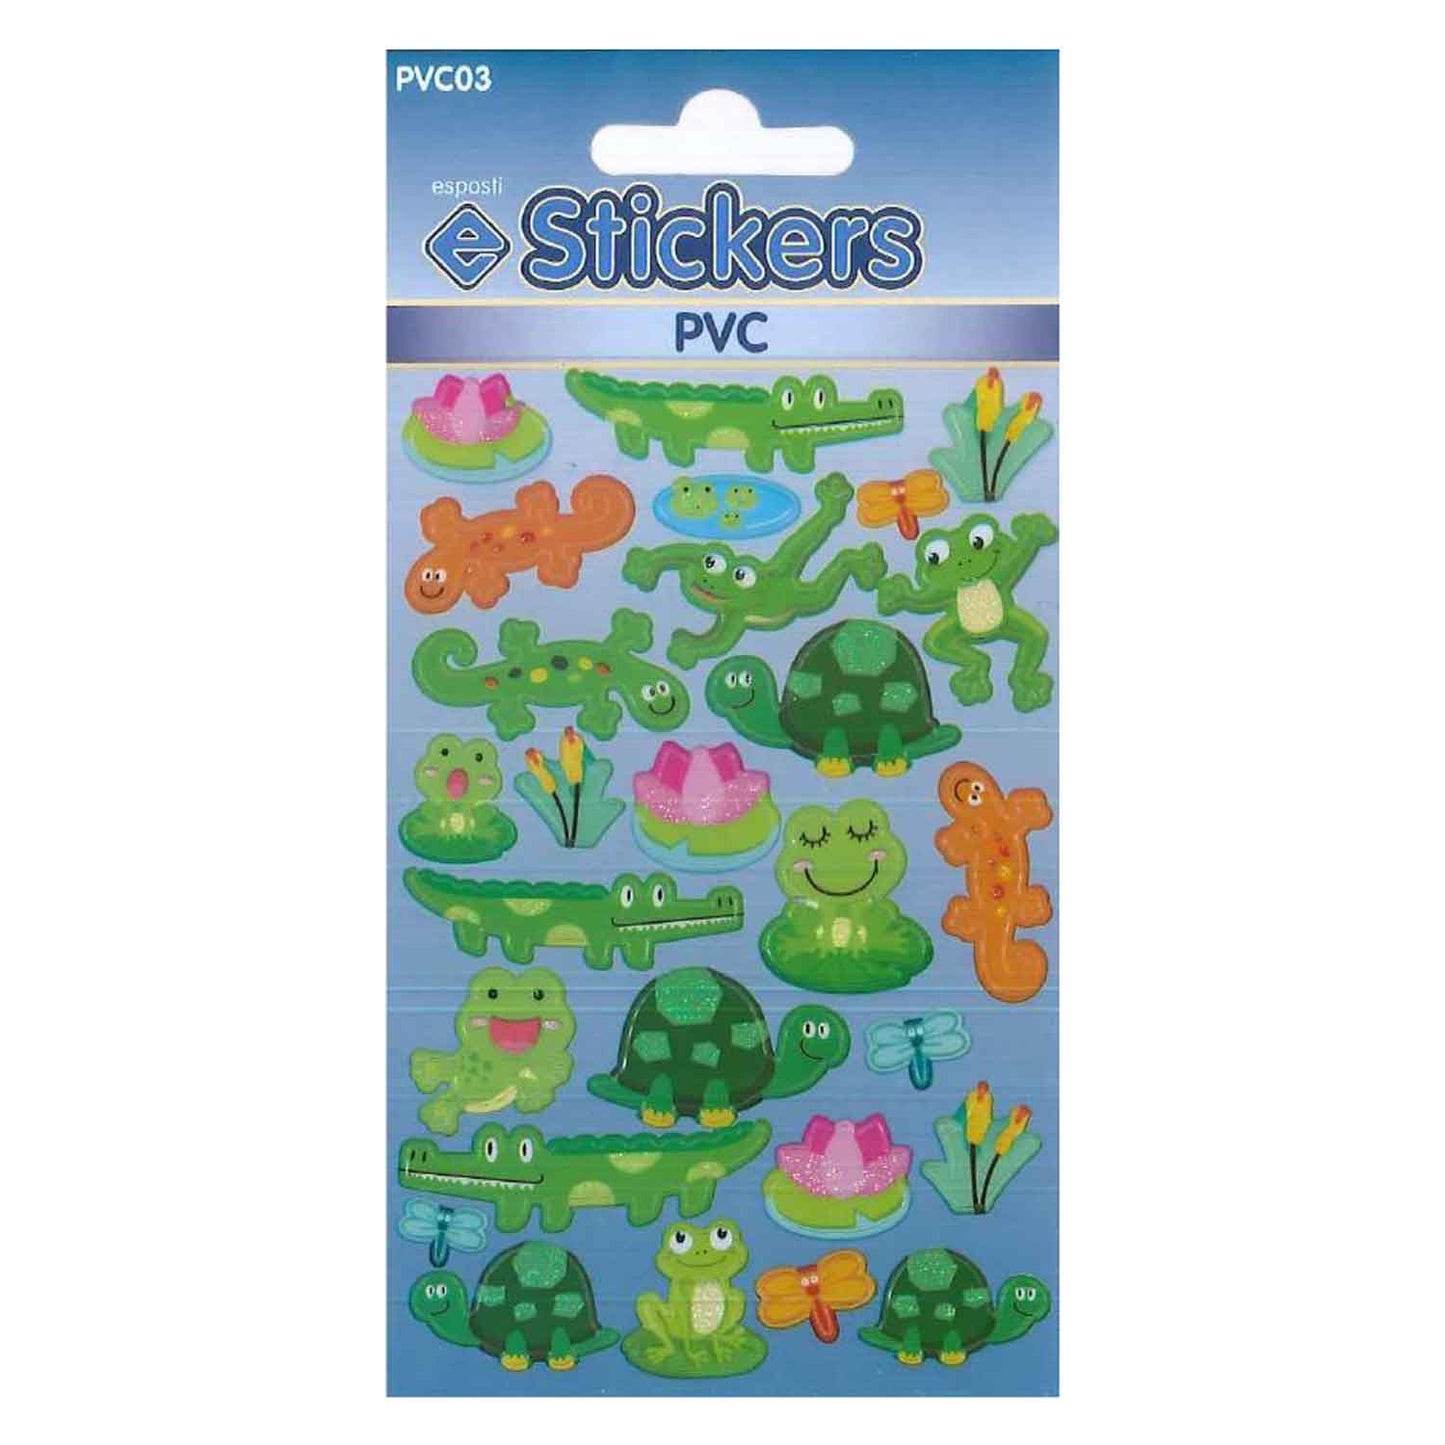 PVC Frogs & Reptiles Stickers - PVC03